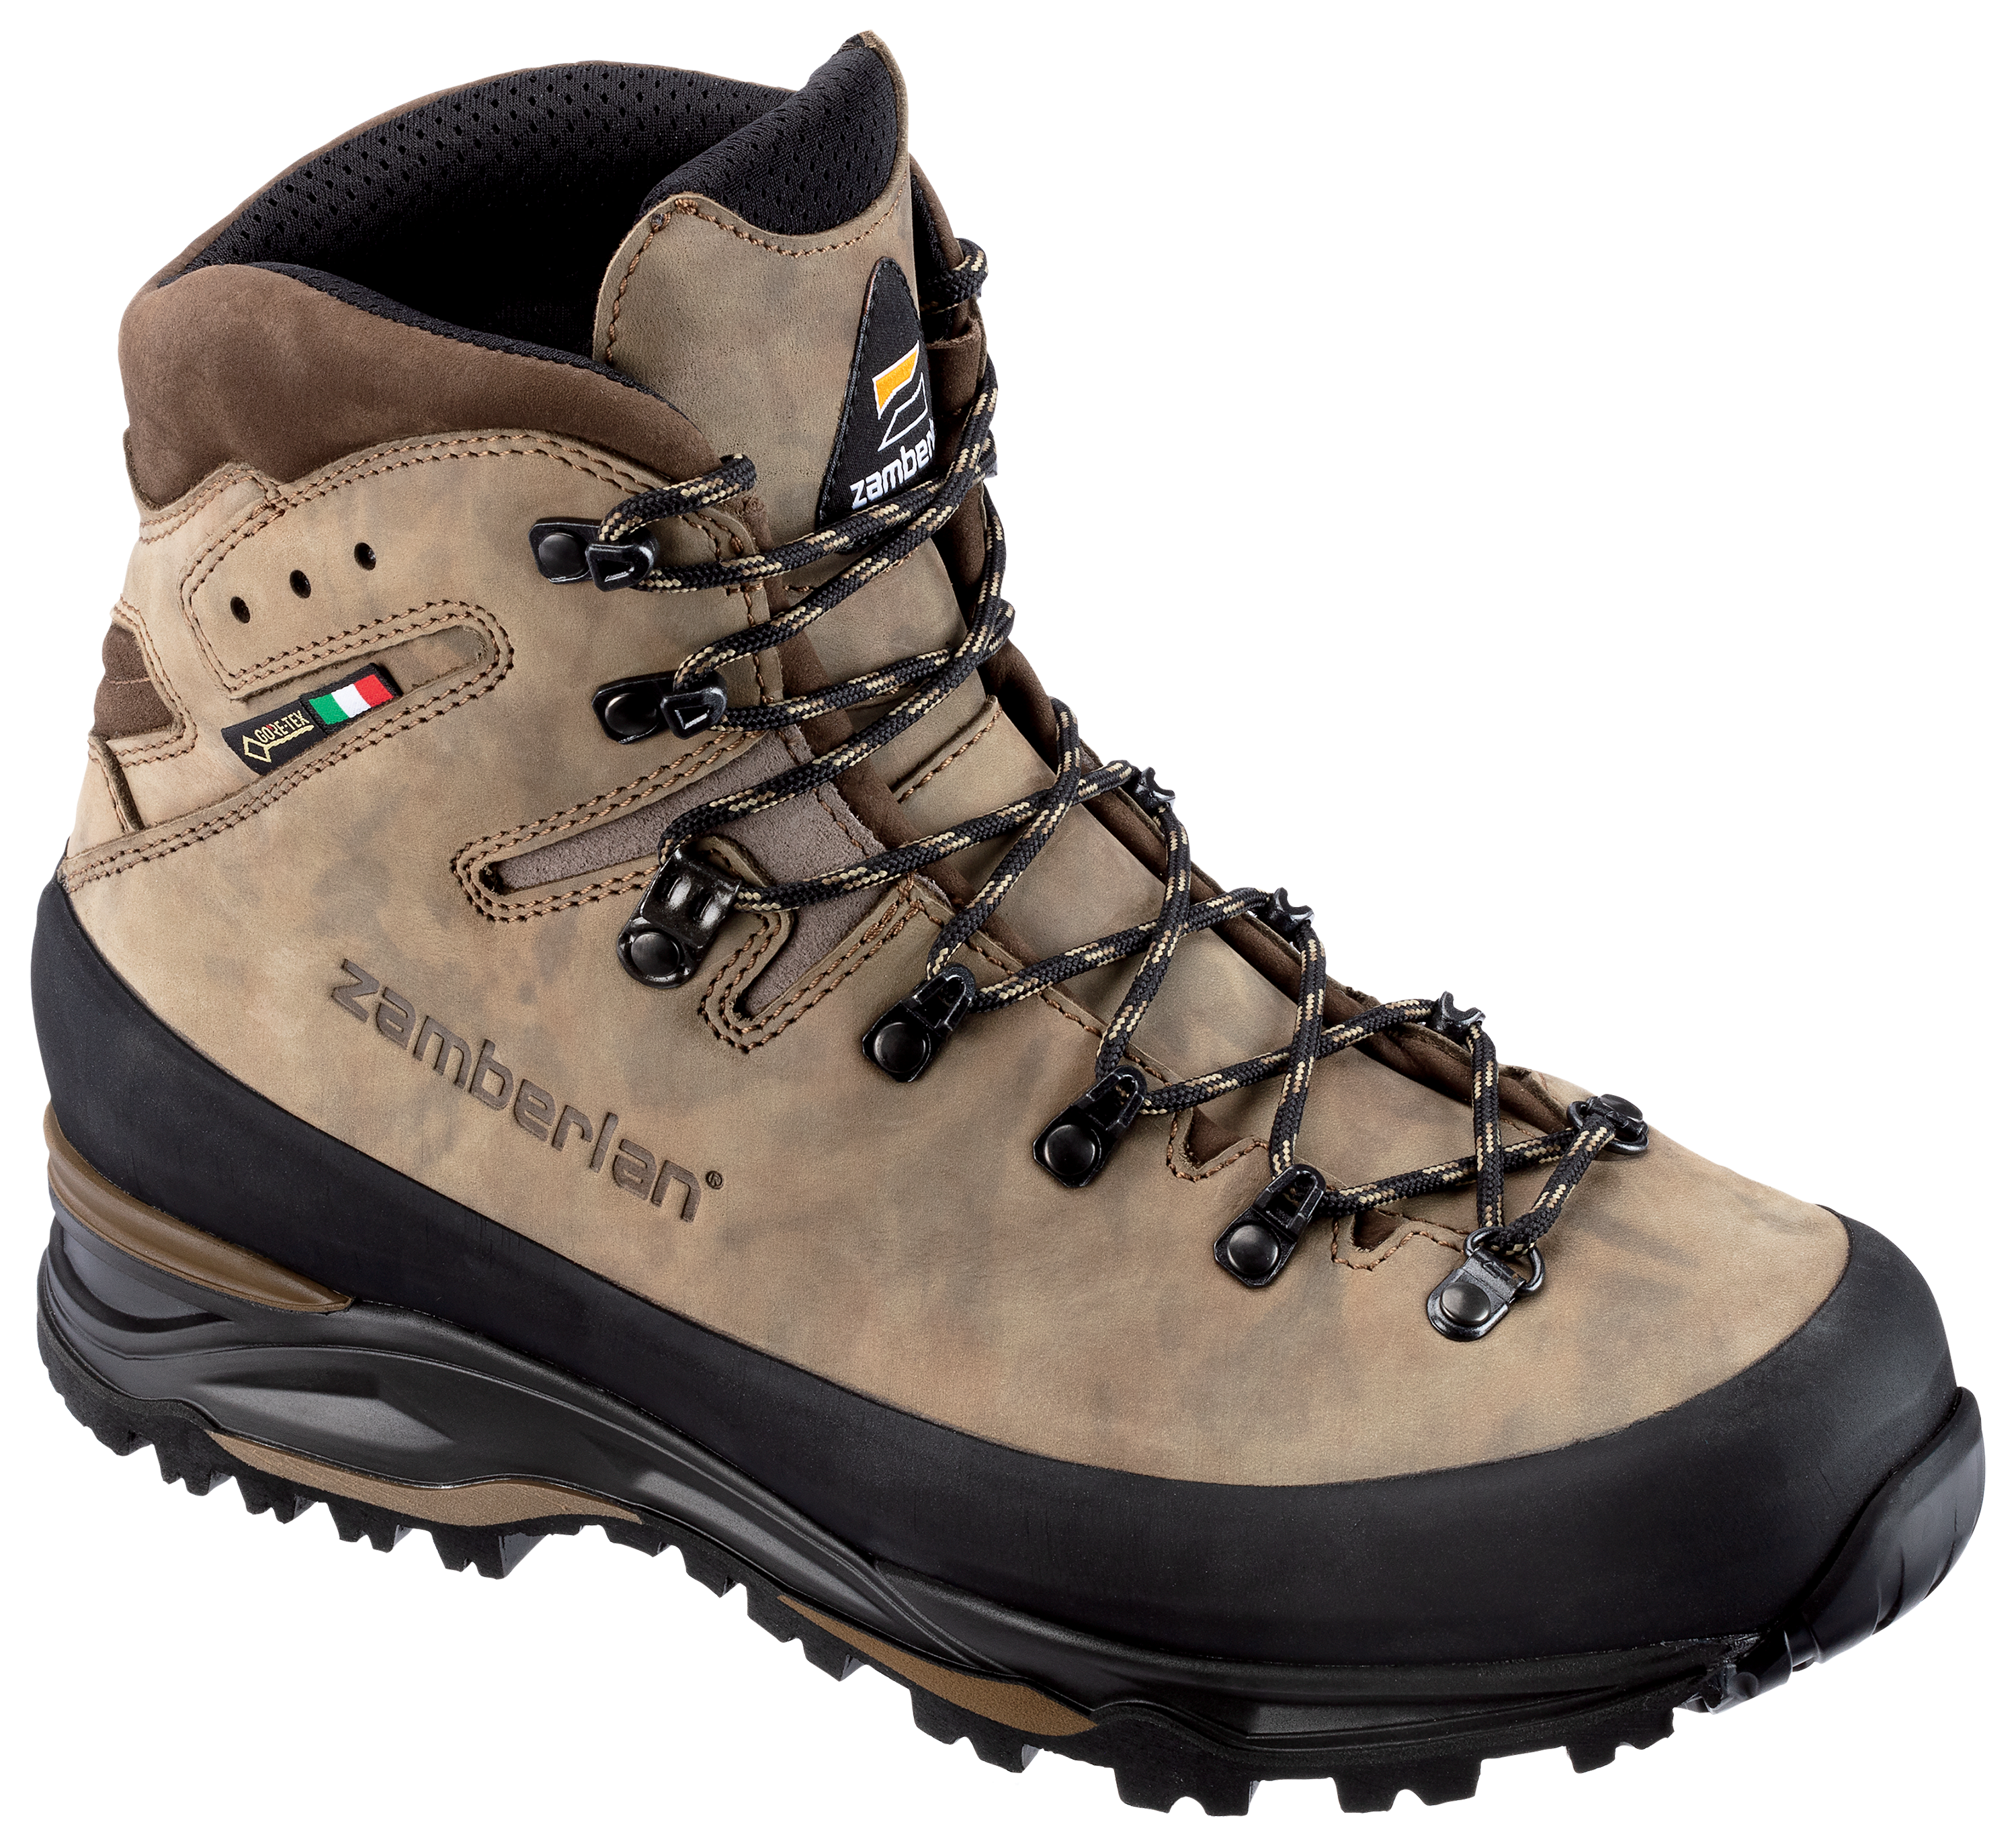 Zamberlan 960 Guide GORE-TEX RR Hunting Boots for Men - Brown Camo - 11W